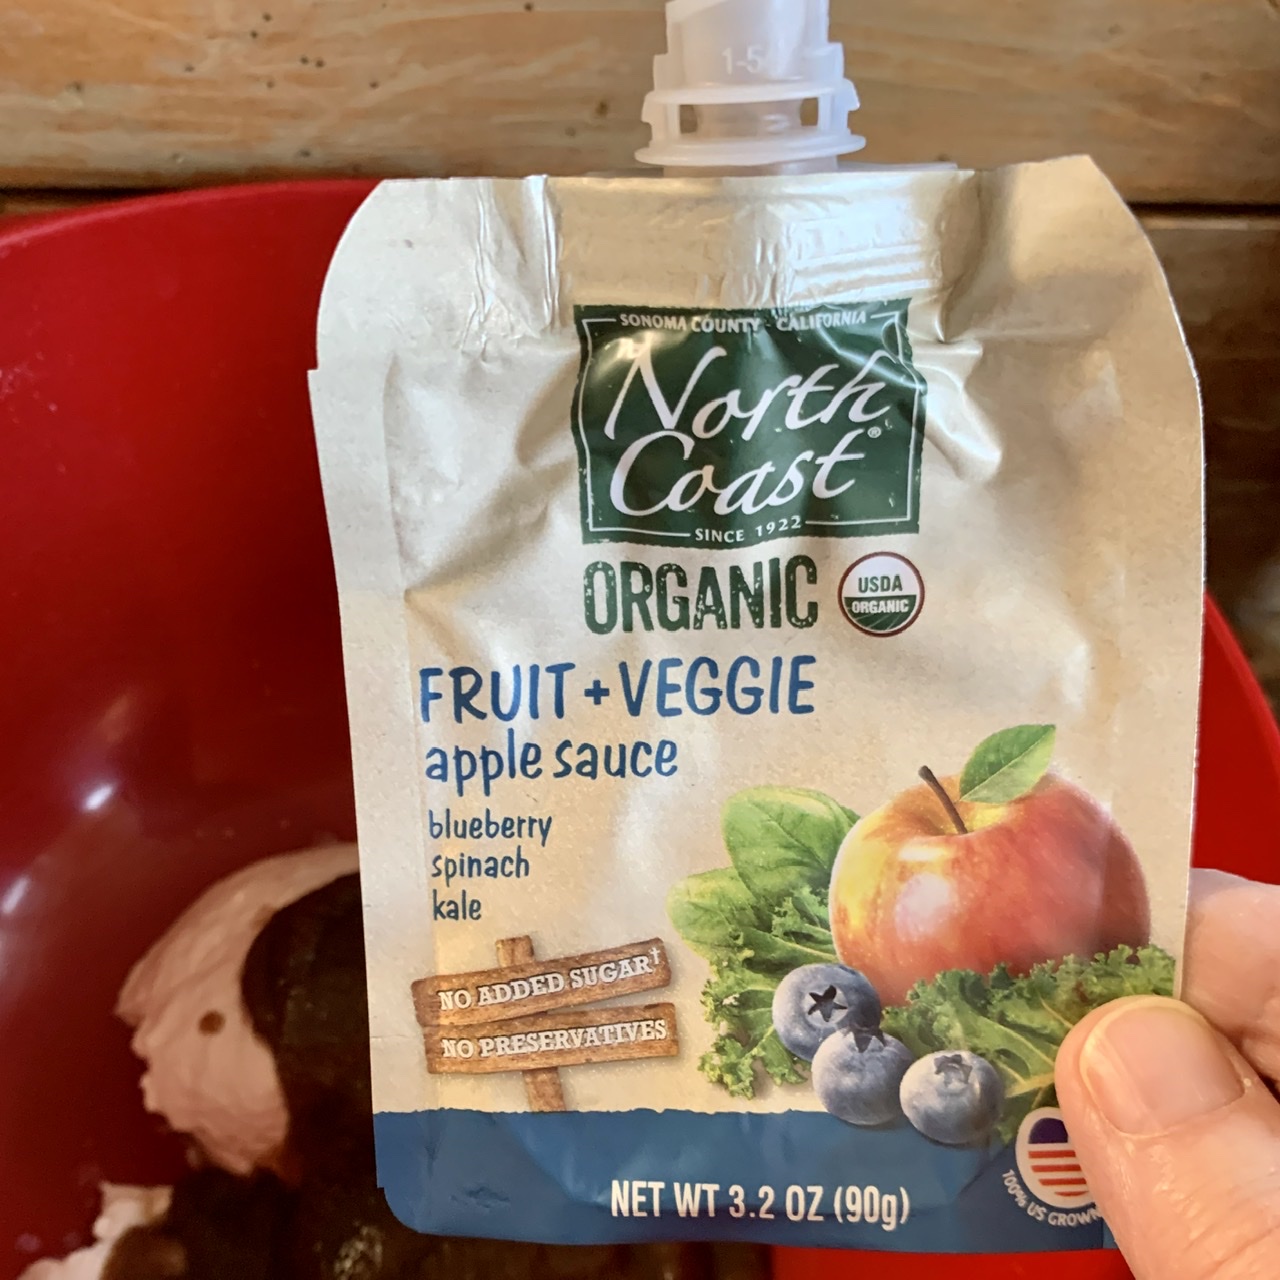 North Coast Organics Fruit and Veggie Applesauce